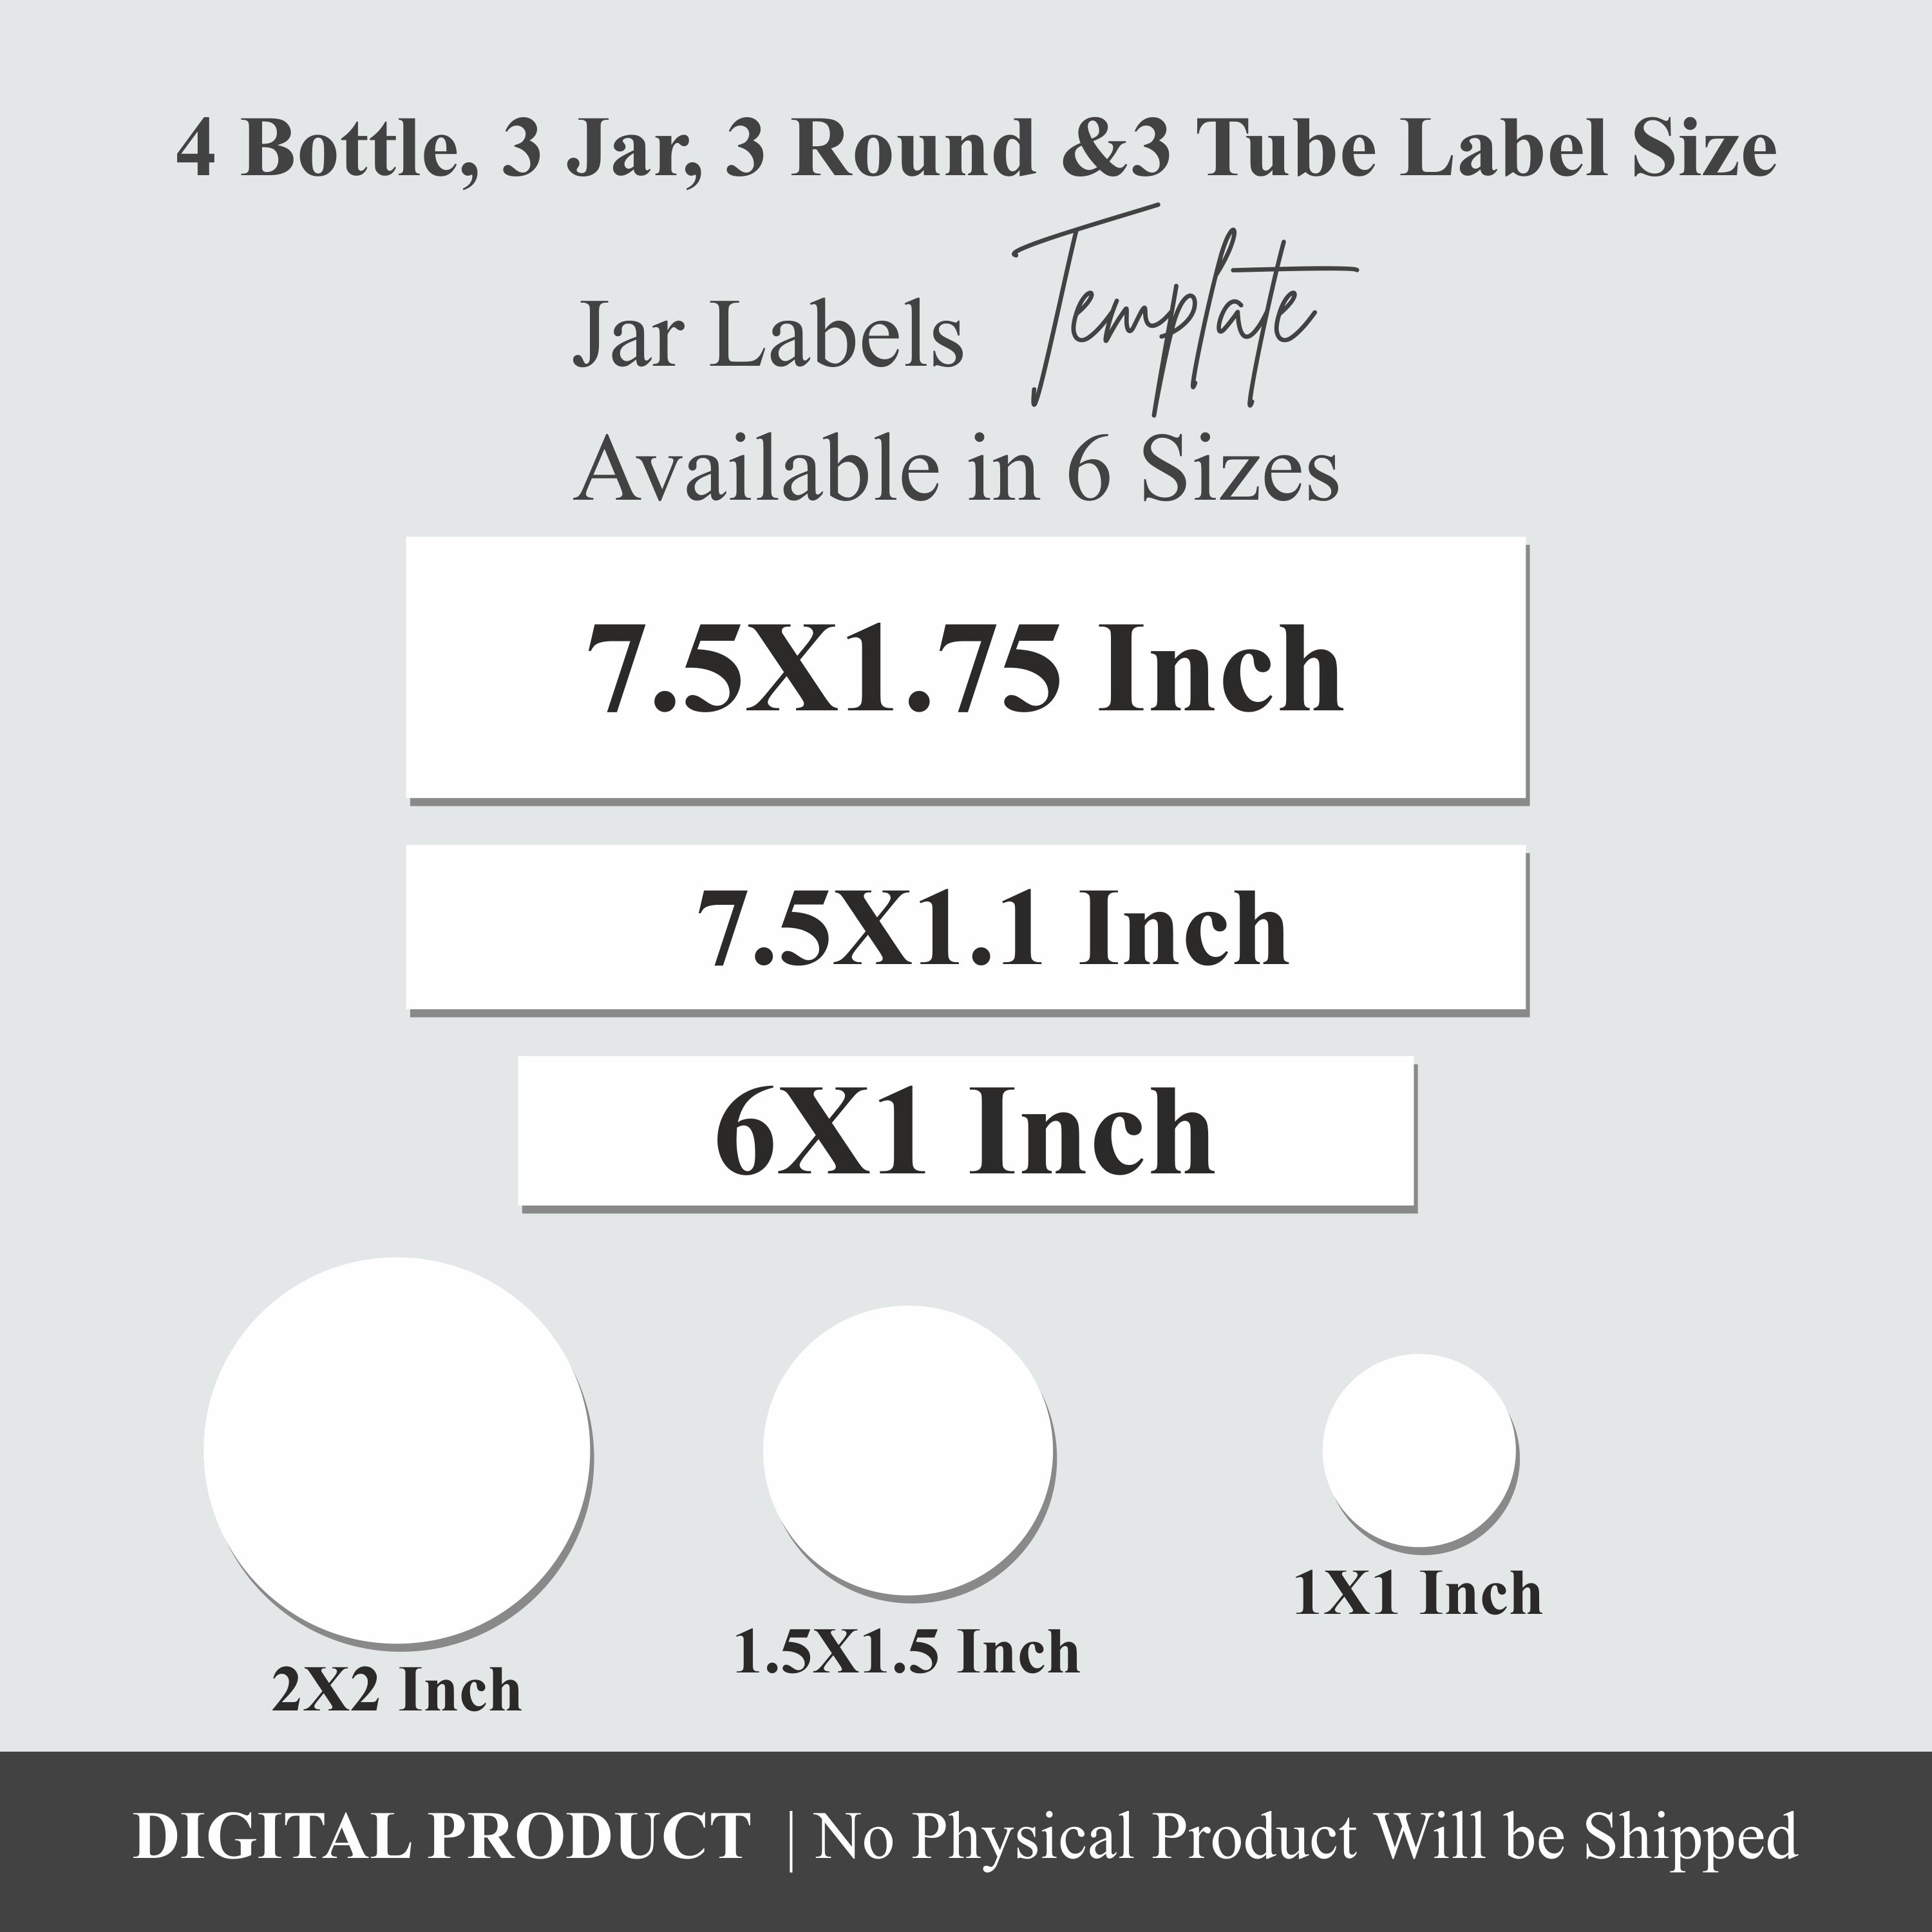 Argan & Coconut Shampoo, zenvista, zenvista packaging, Labels, Logos, Product label, jar labels, bottle labels,digital label, editable label,customised label,product templates,canva,